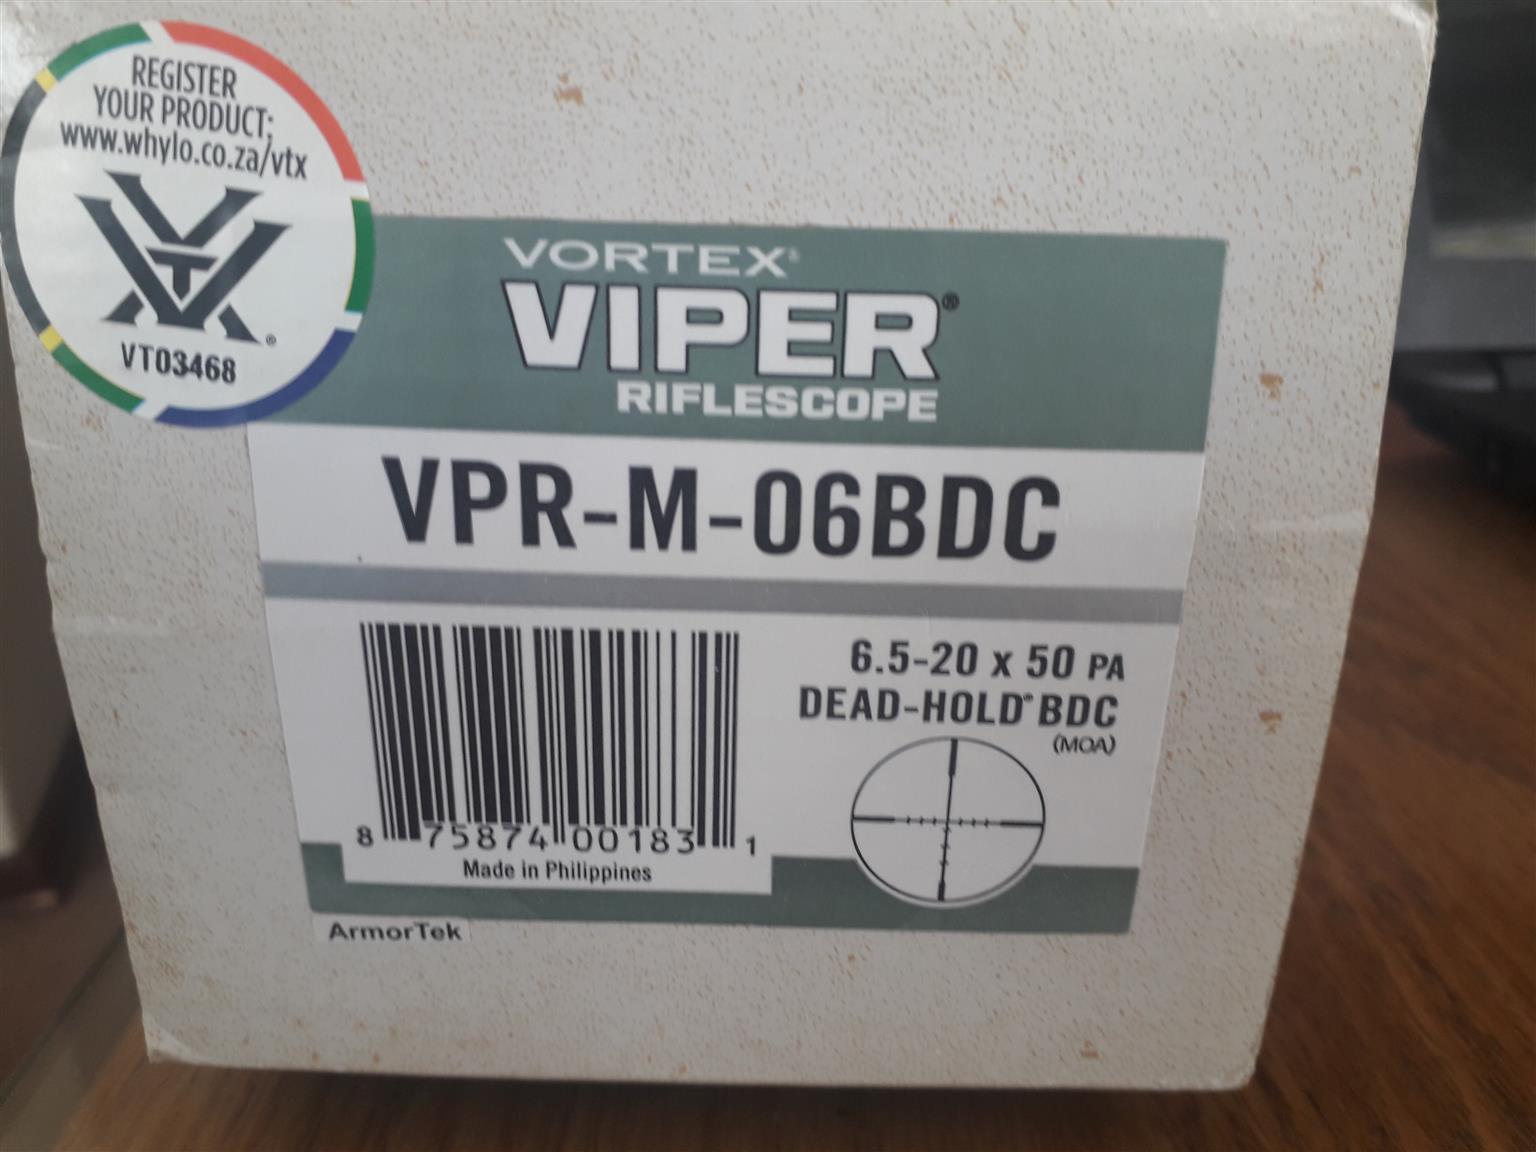 Vortex viper rifle scope 